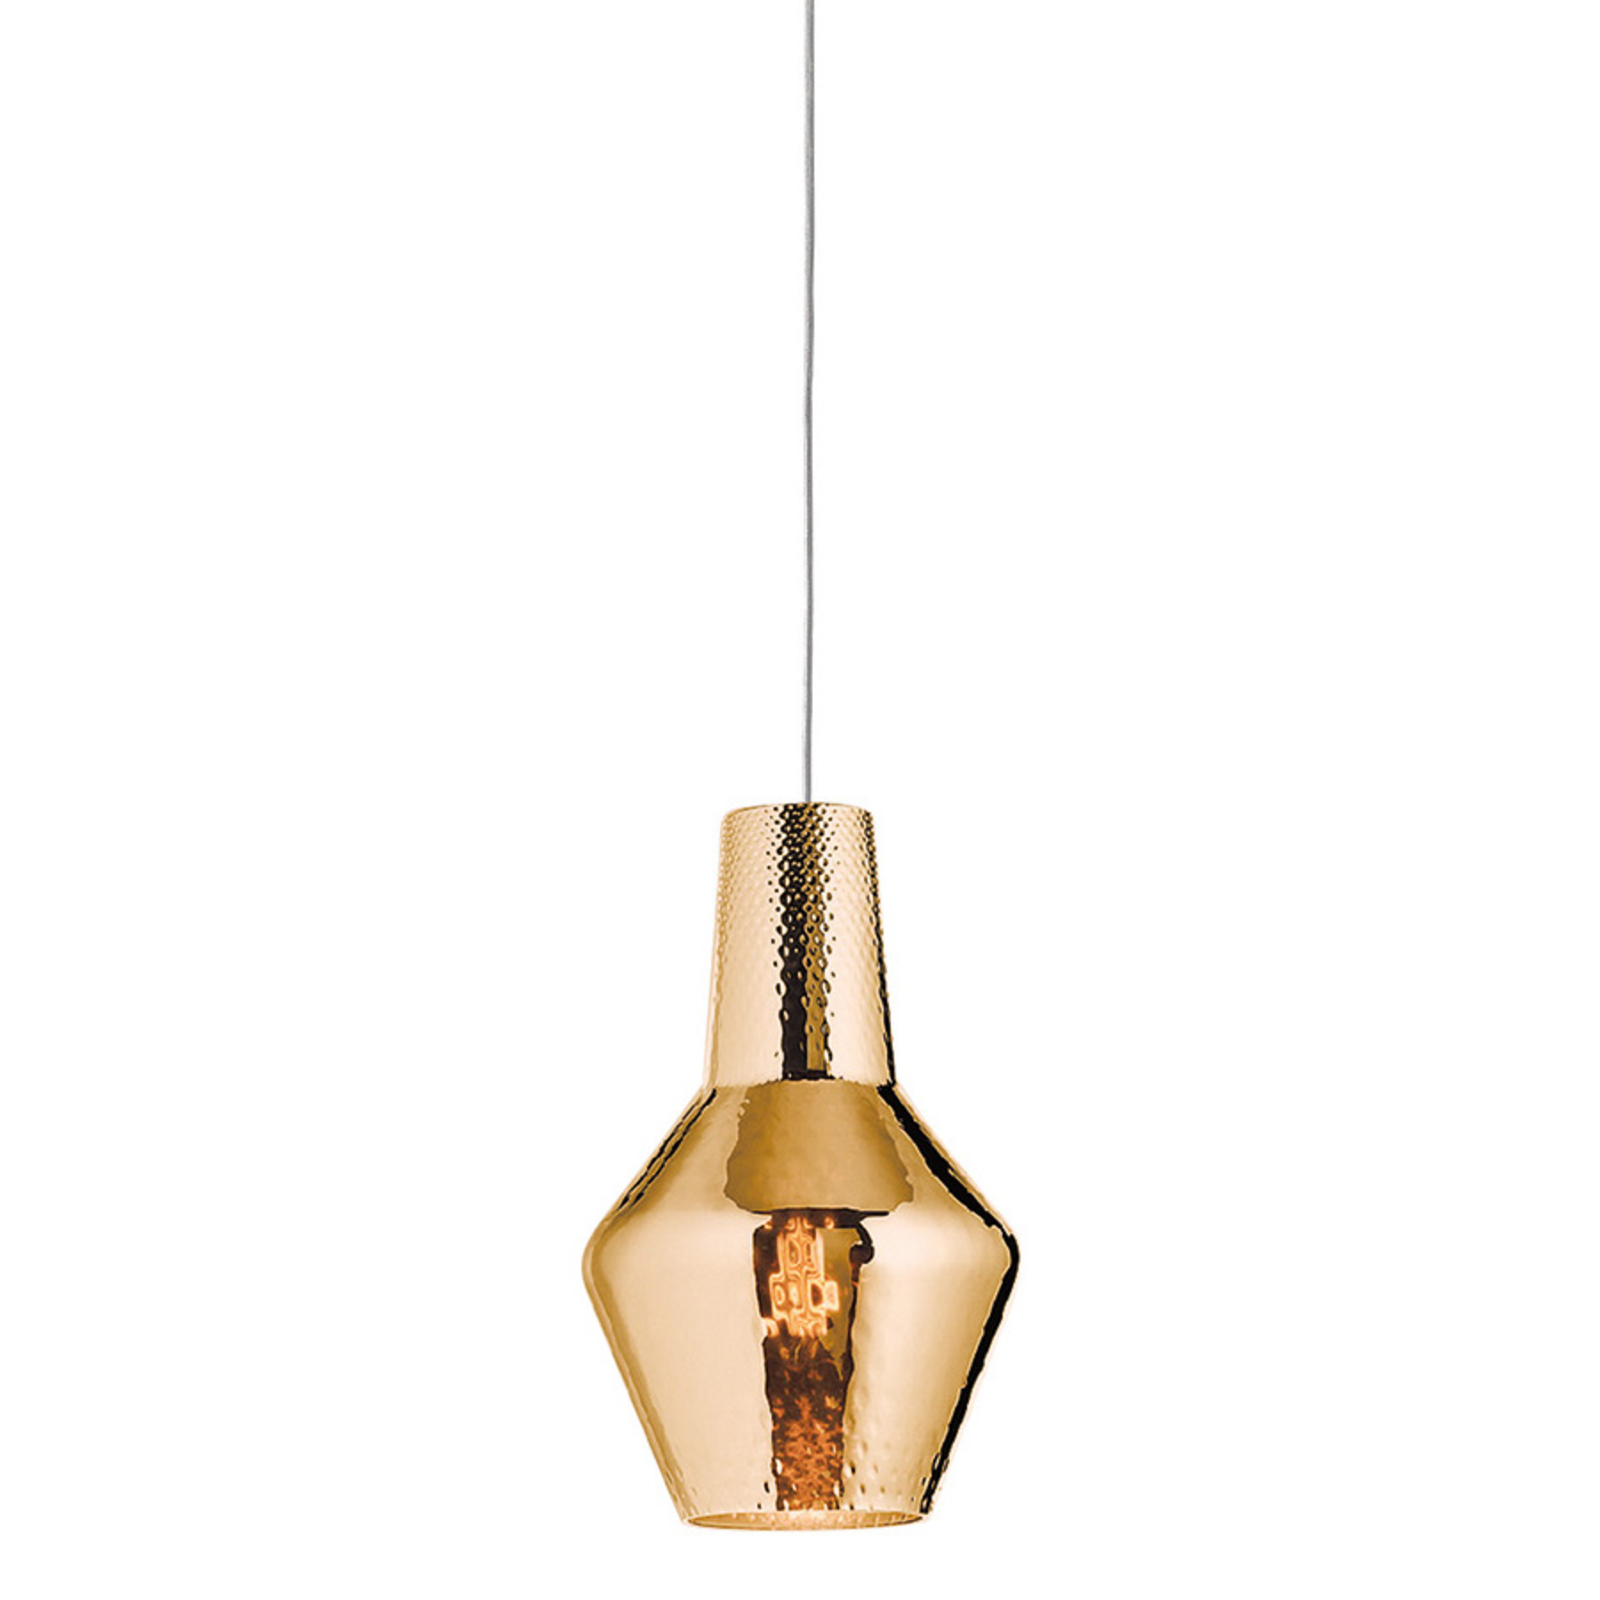 Hanglamp Romeo 130 cm oud goud metallic